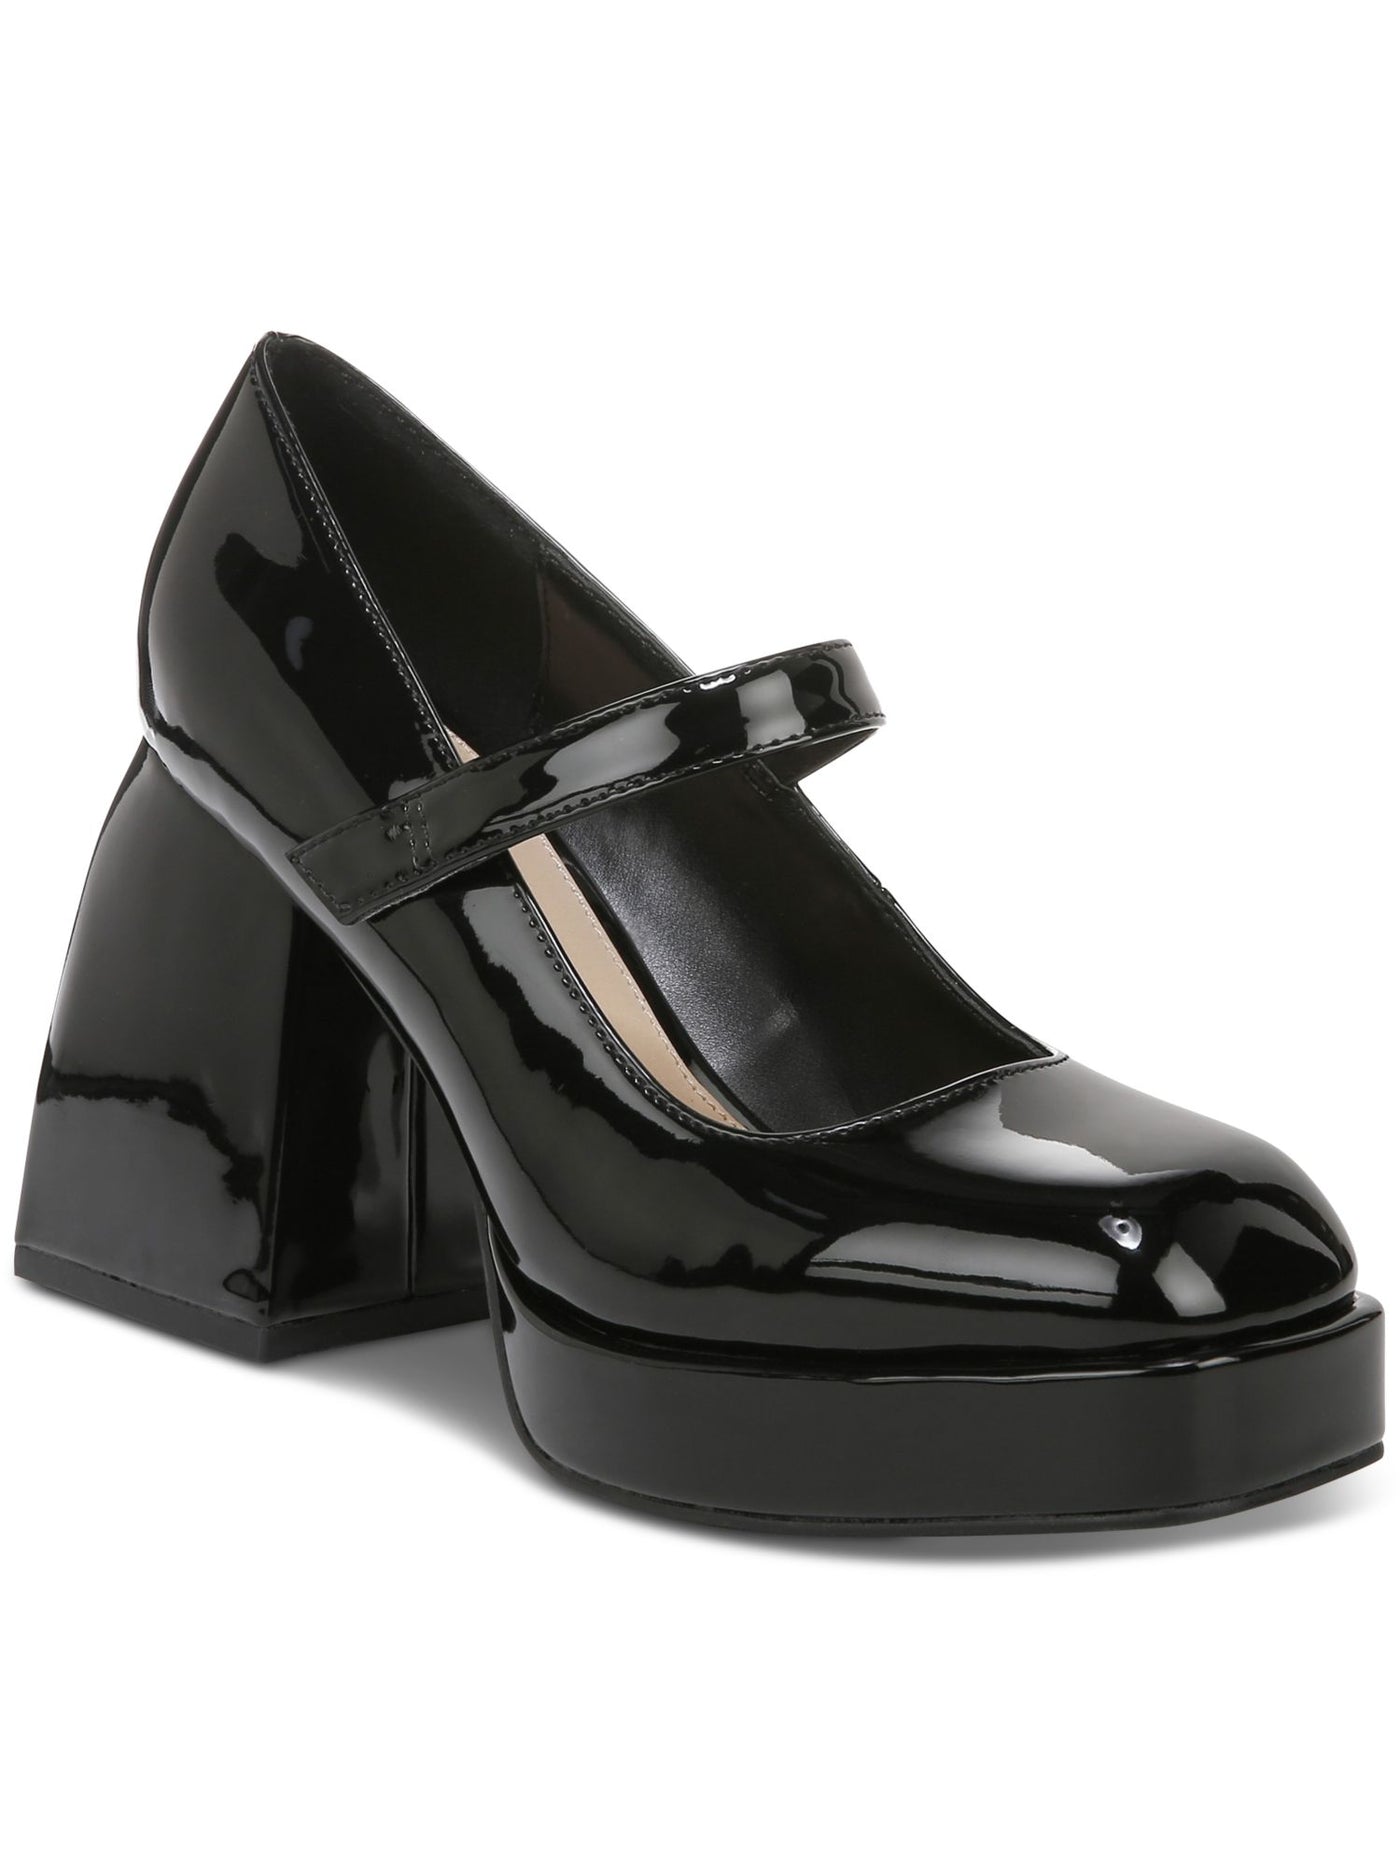 BAR III Womens Black Mary Jane Comfort Nexie Square Toe Flare Slip On Pumps Shoes 7.5 M